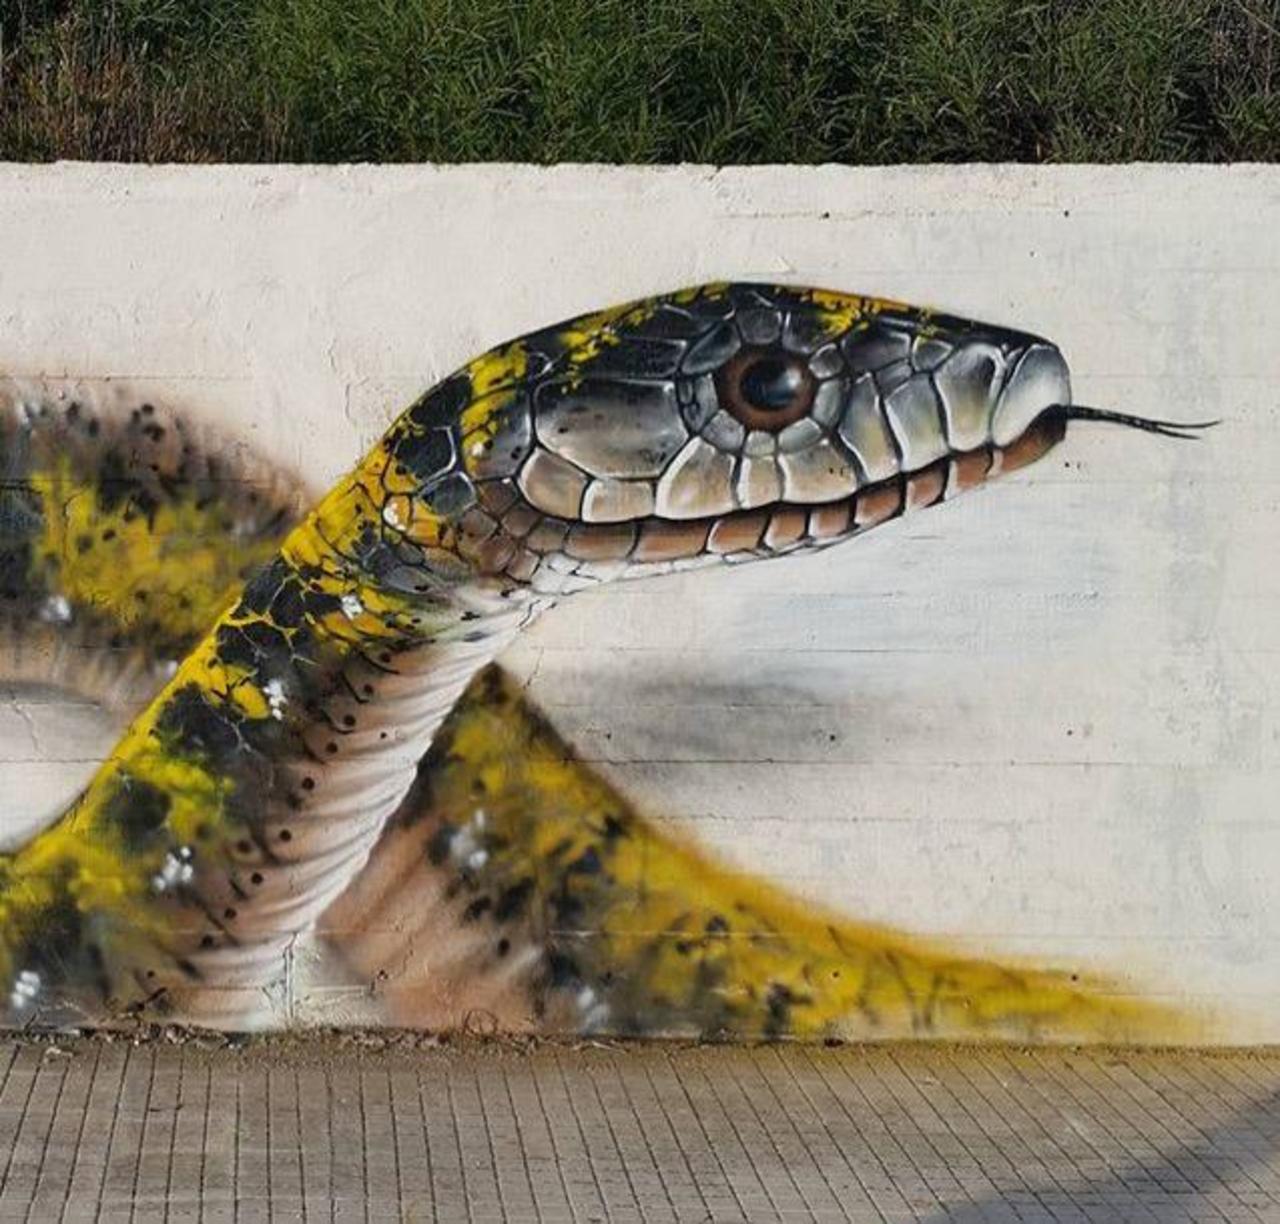 Street Art by Cosimocheone 

#art #graffiti #mural #streetart http://t.co/Csj9xfoekq